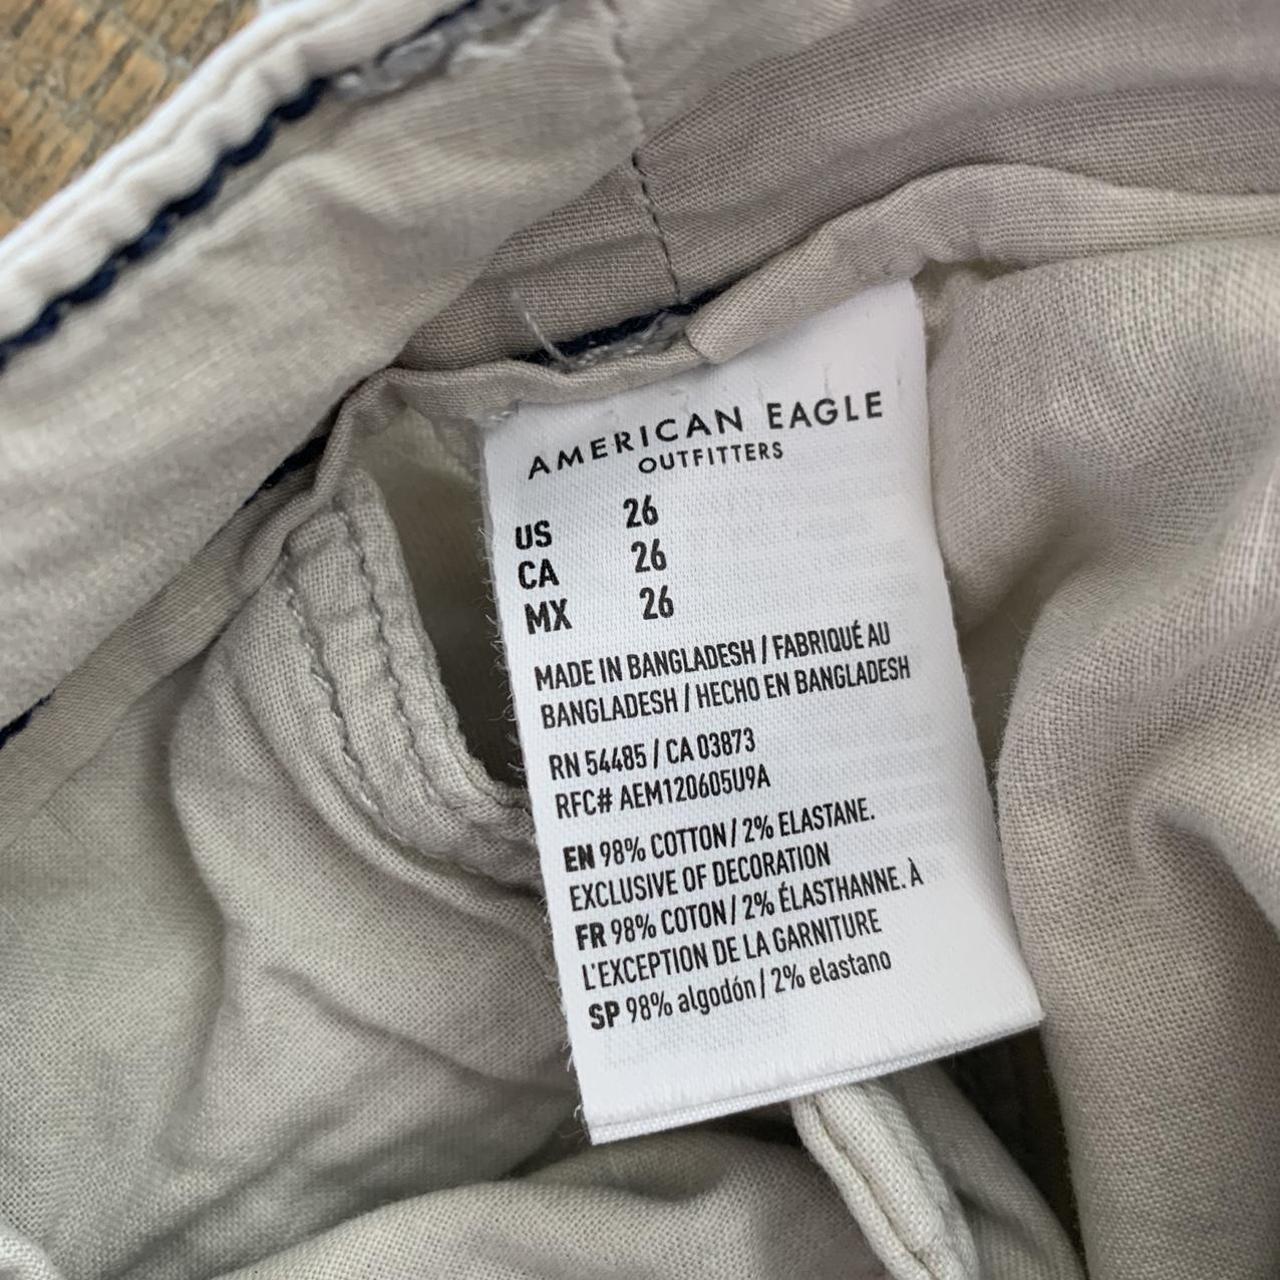 Product Image 3 - Grey cargo shorts

Size 26
10/10 condition
Us